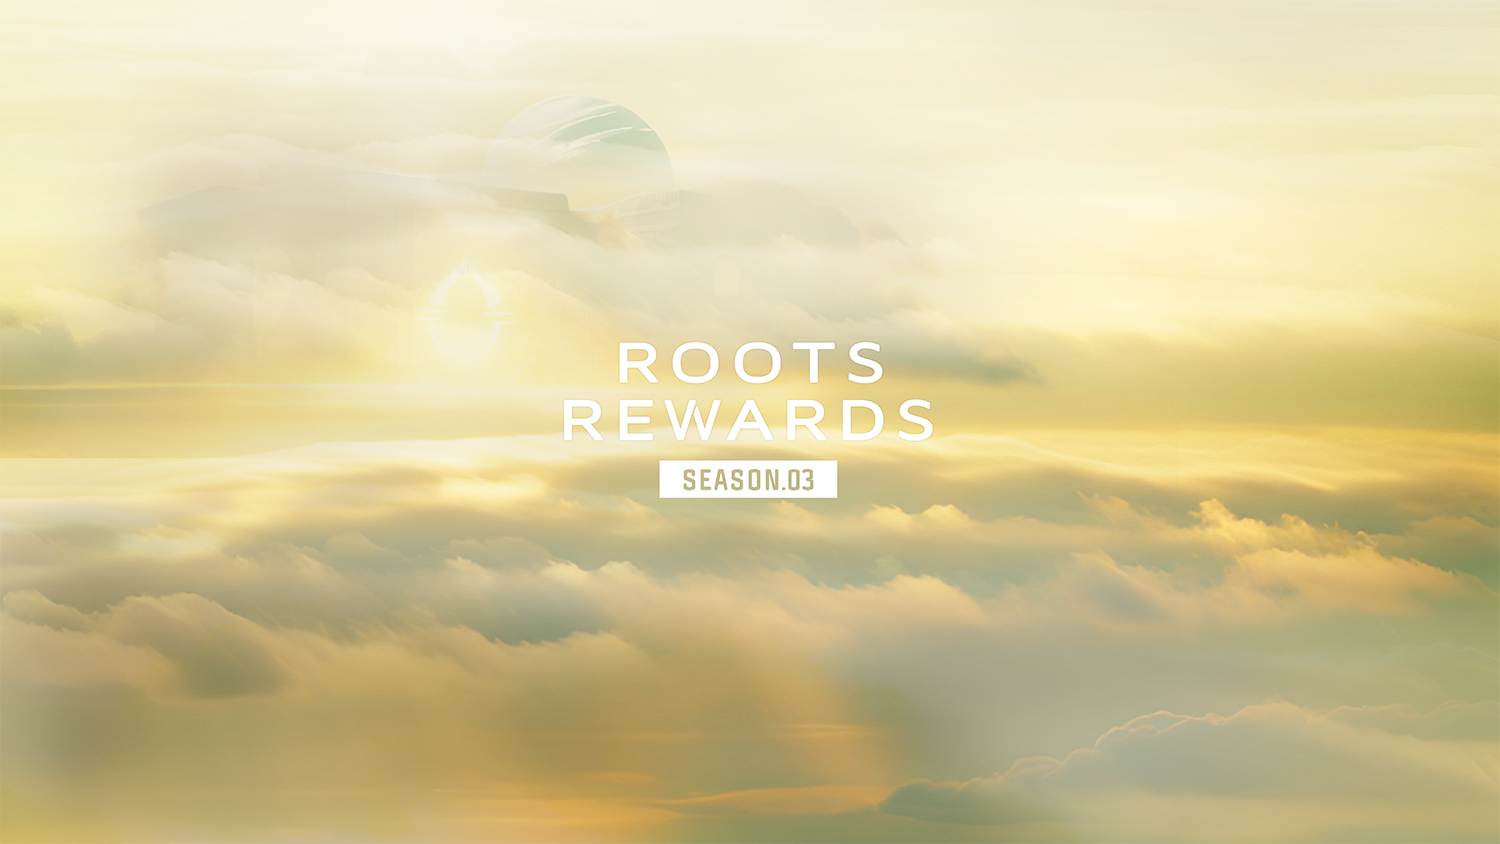 “ROOTS REWARDS Season.03” 開始